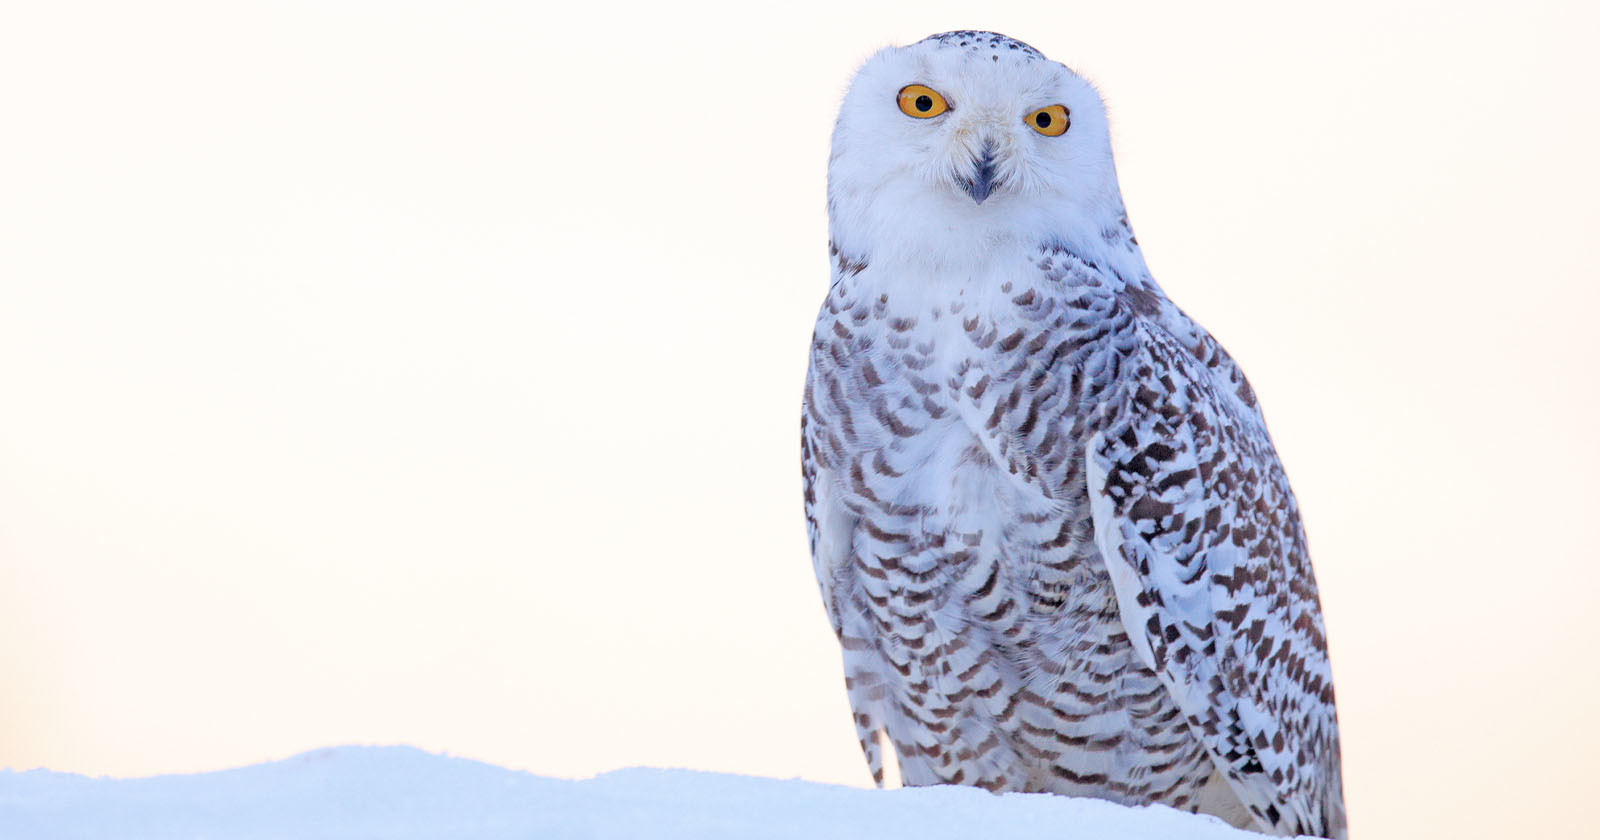  facebook groups ban paparazzi-like photographs snowy owls 